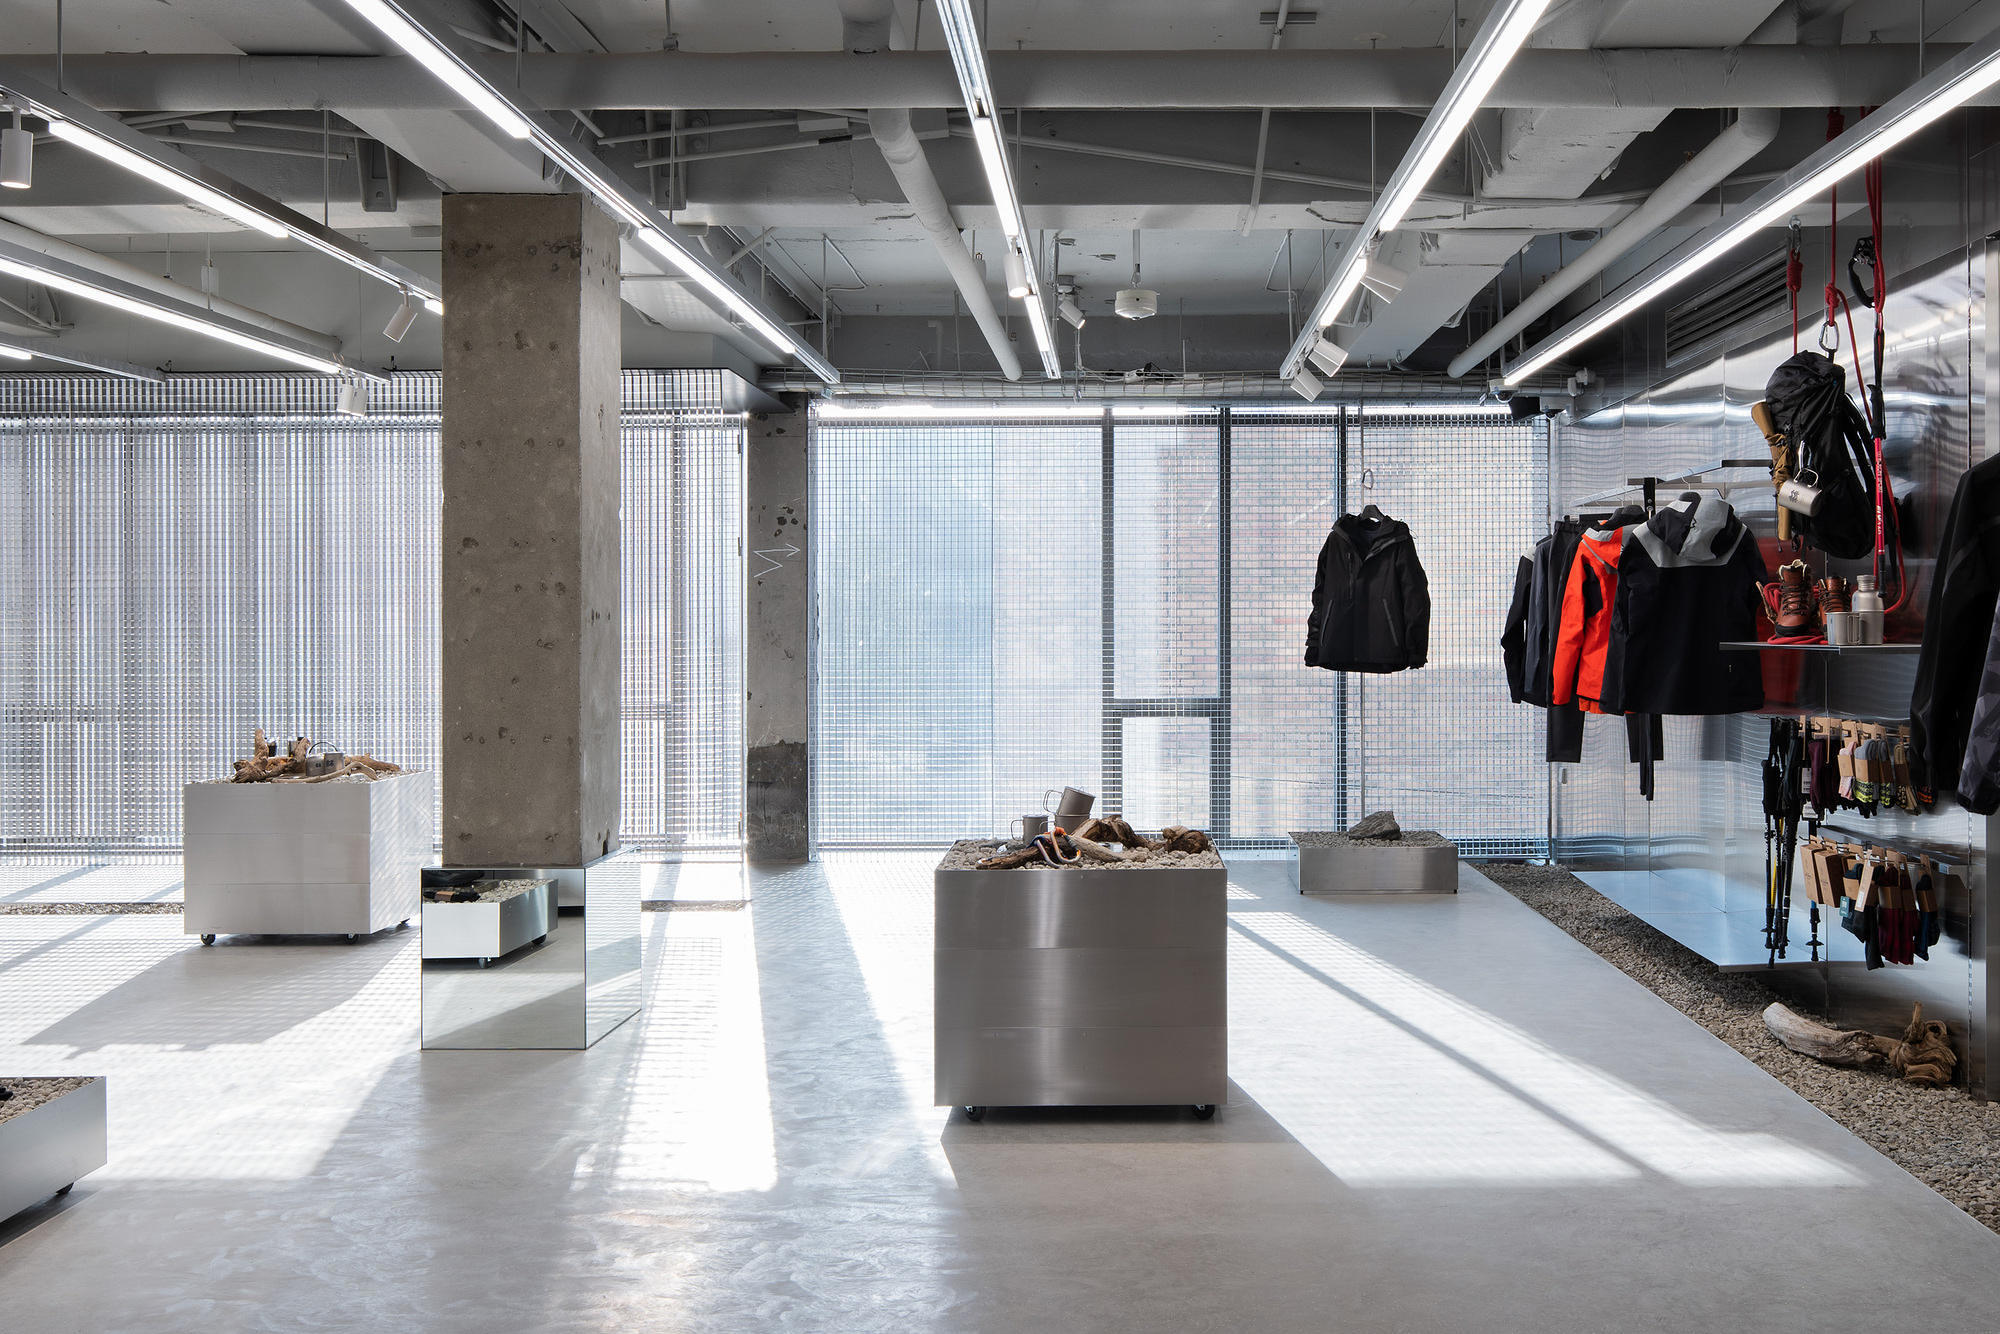 Industrial design elements in retail interiors